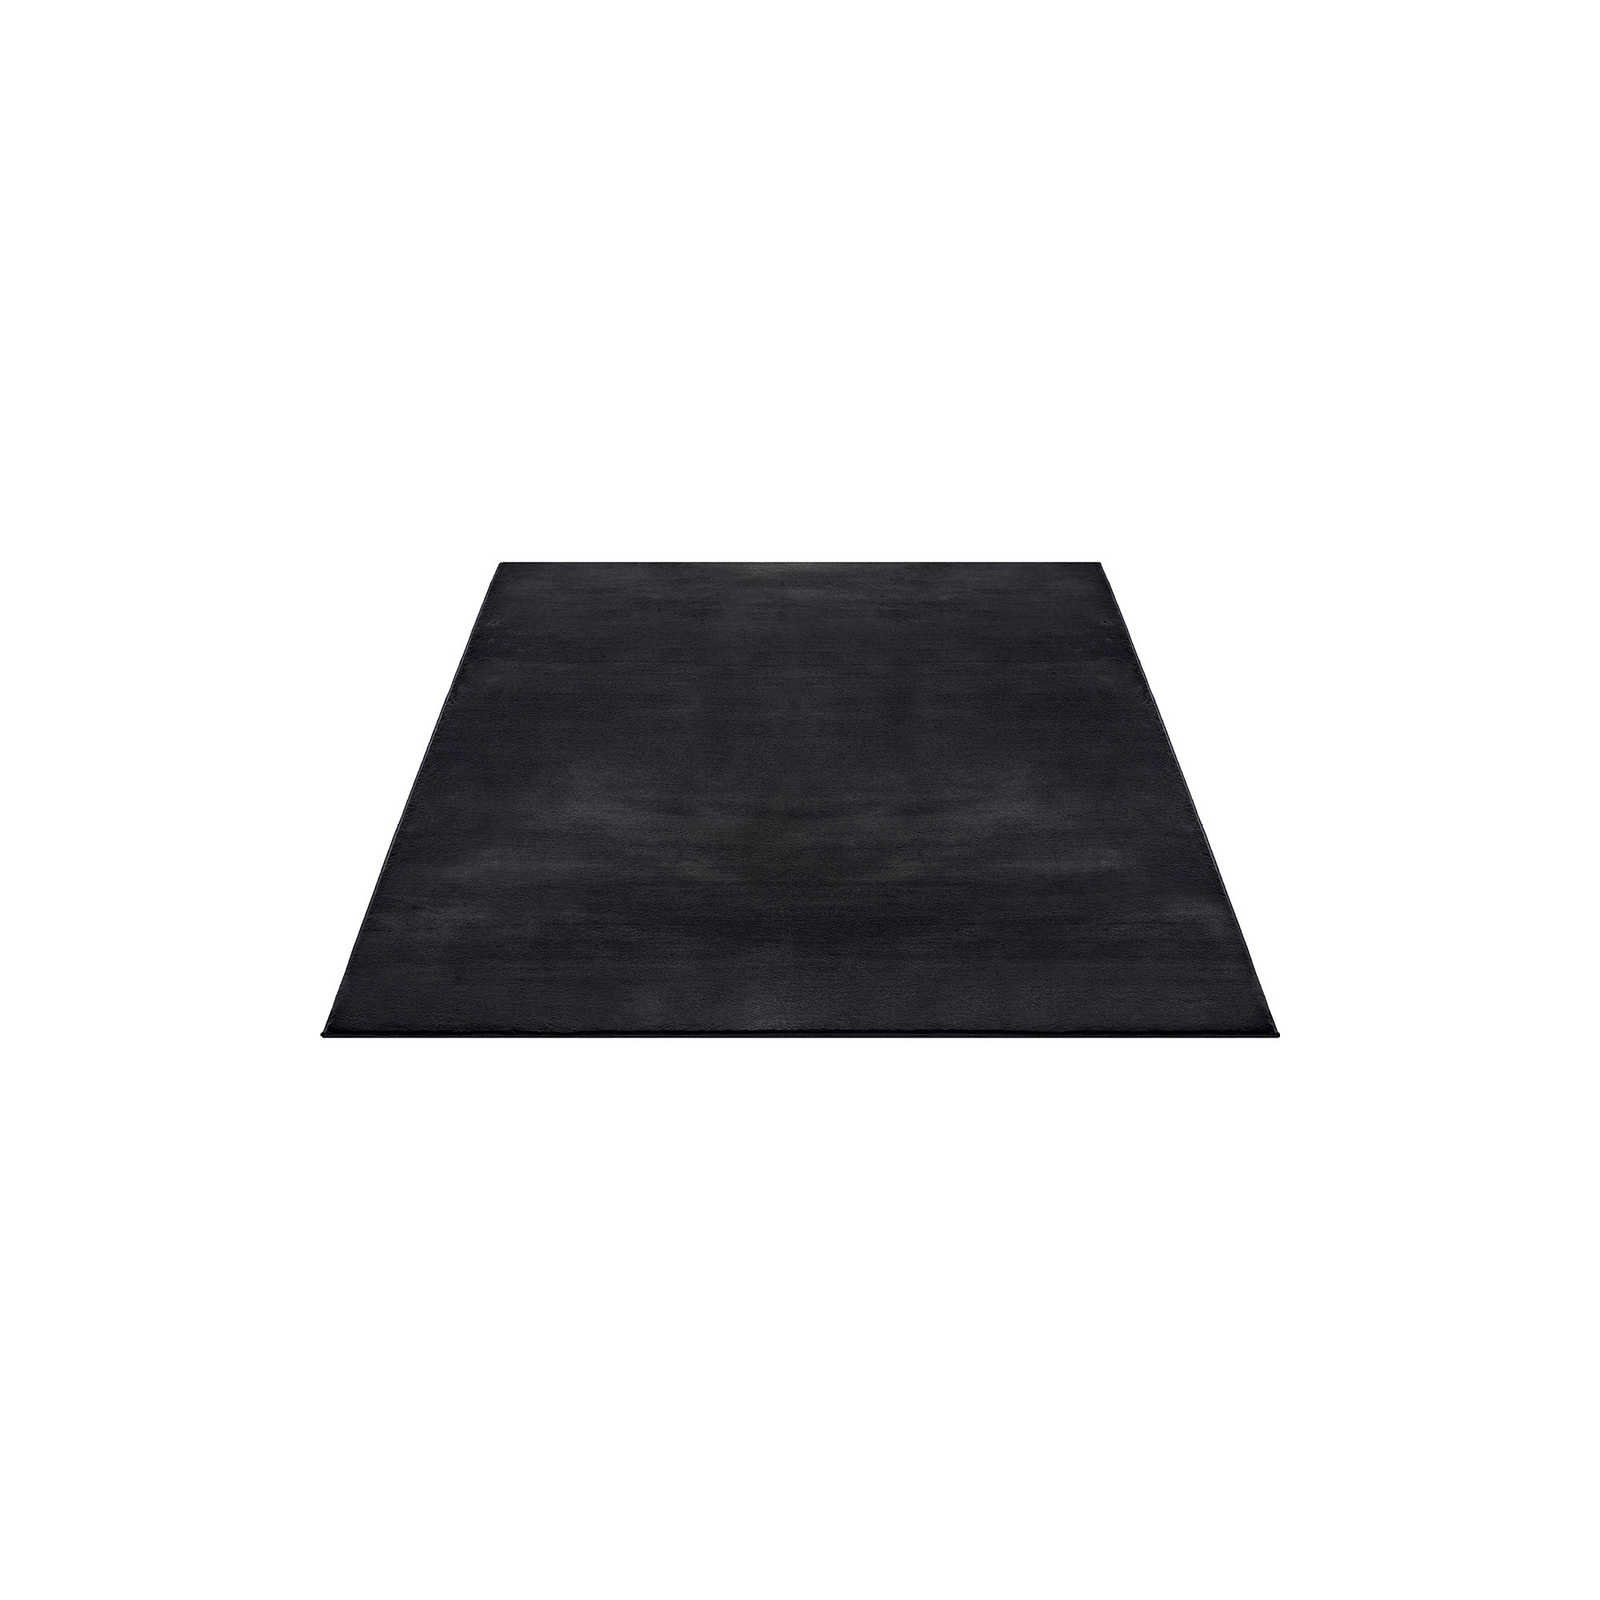 Knuffelzacht hoogpolig tapijt in zwart - 200 x 140 cm
